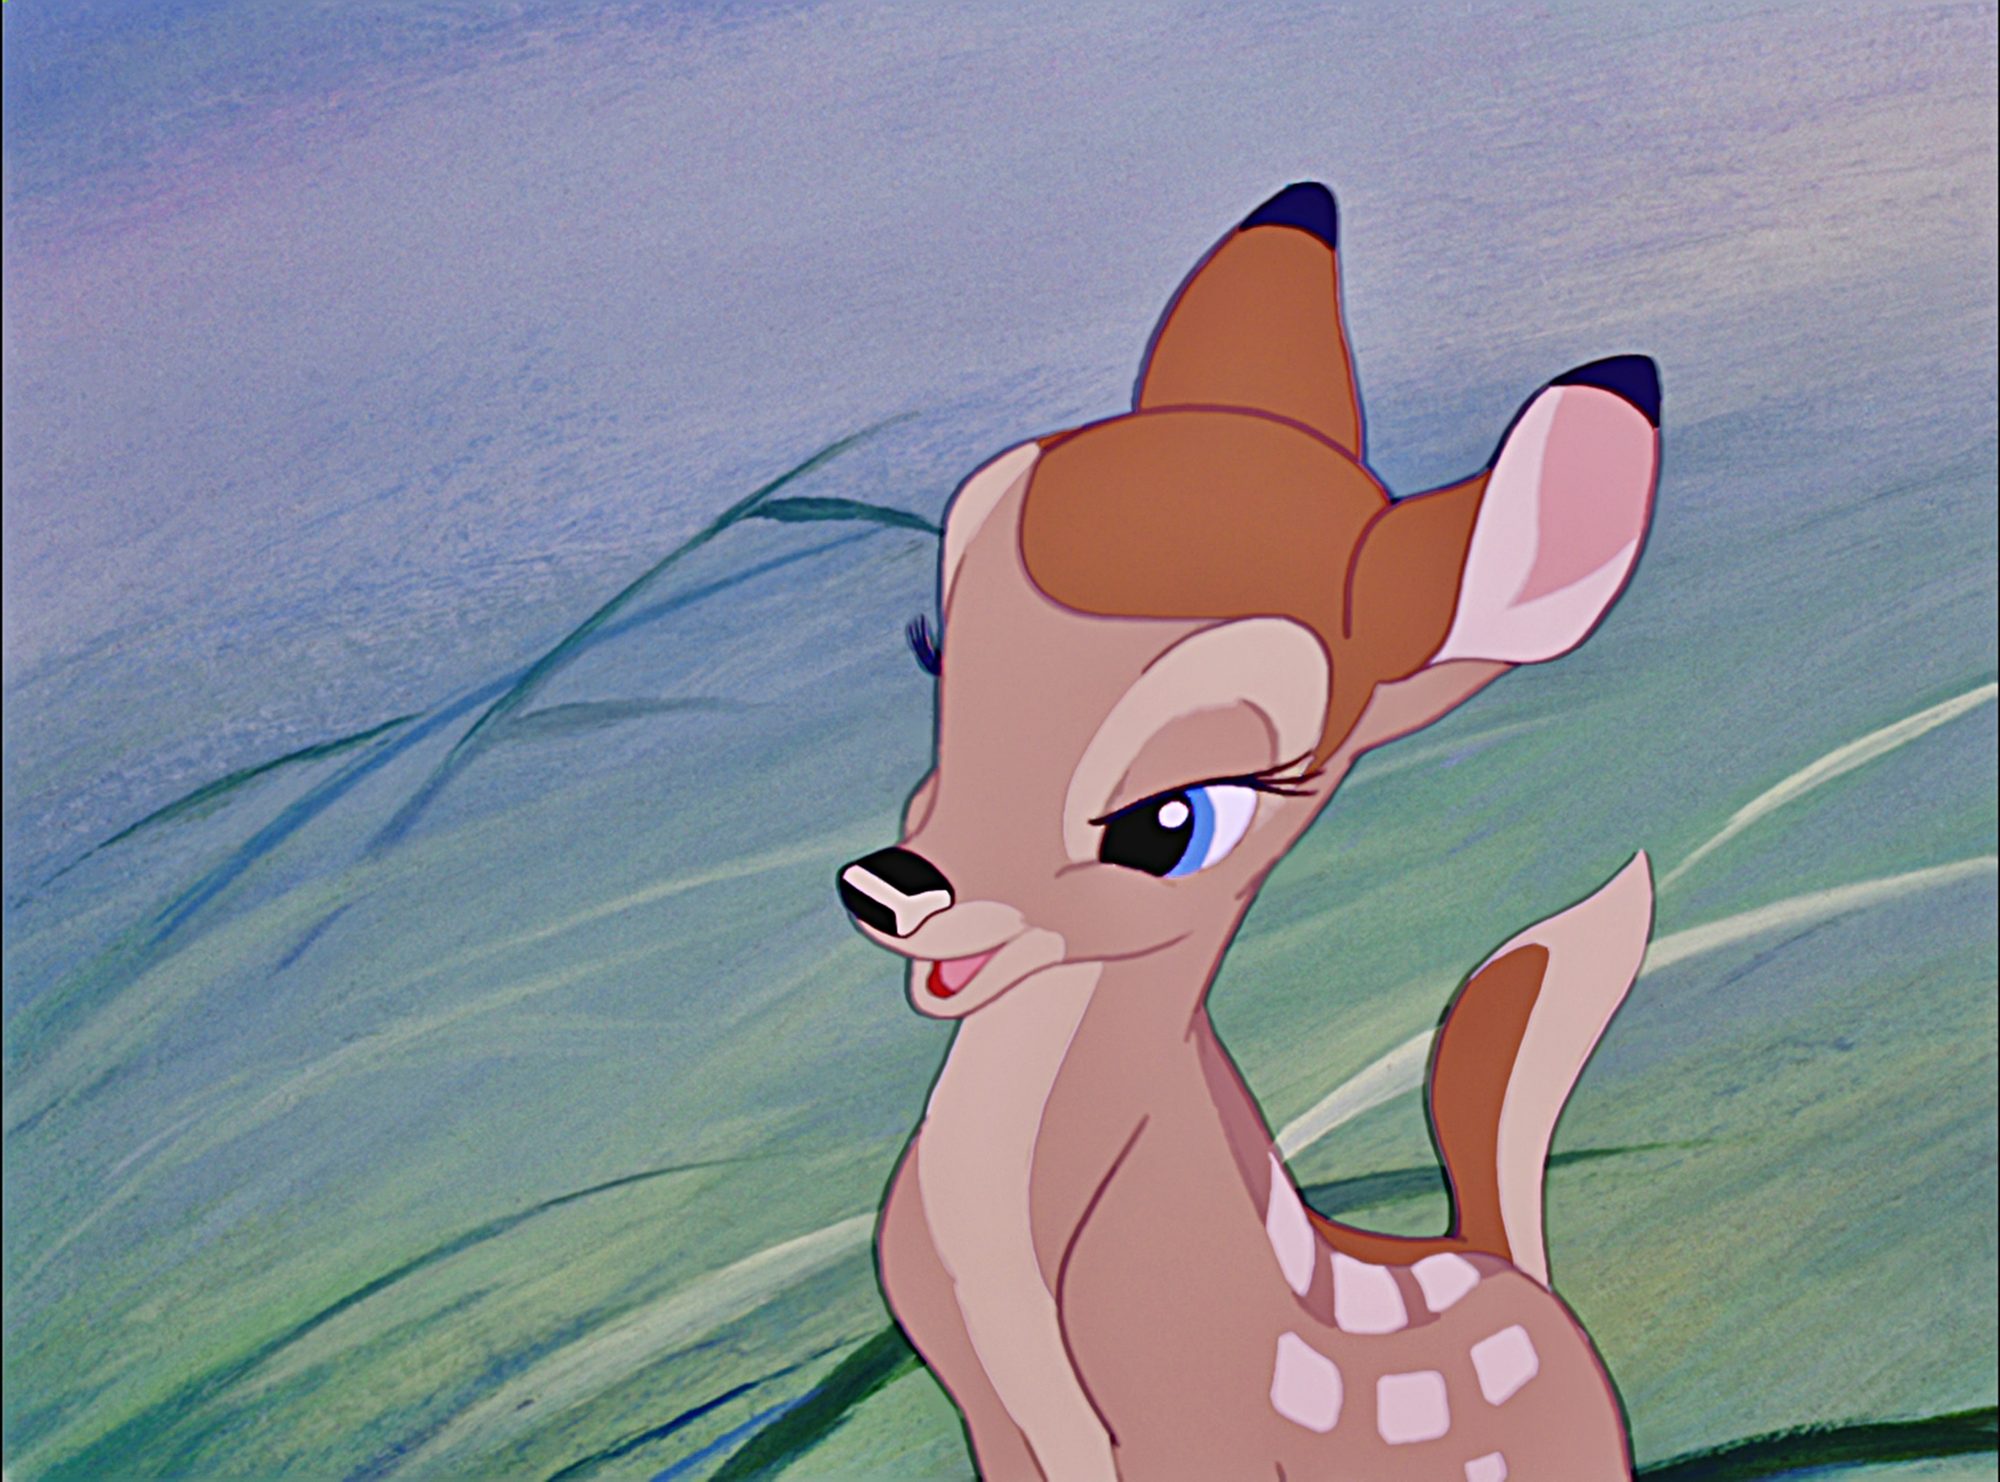 Bambi. 